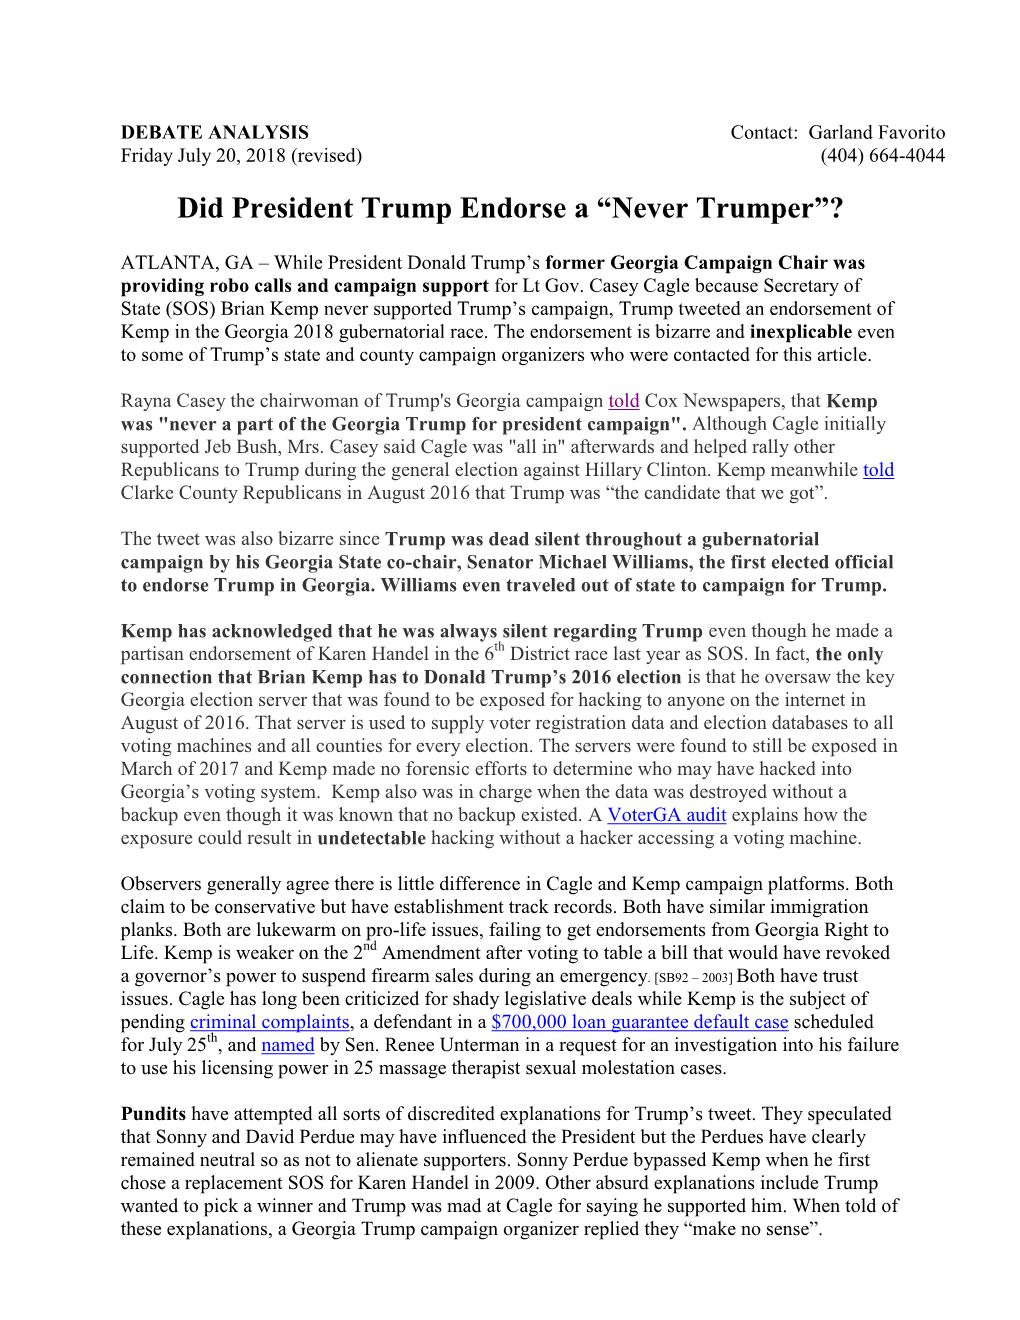 Did President Trump Endorse a “Never Trumper”?